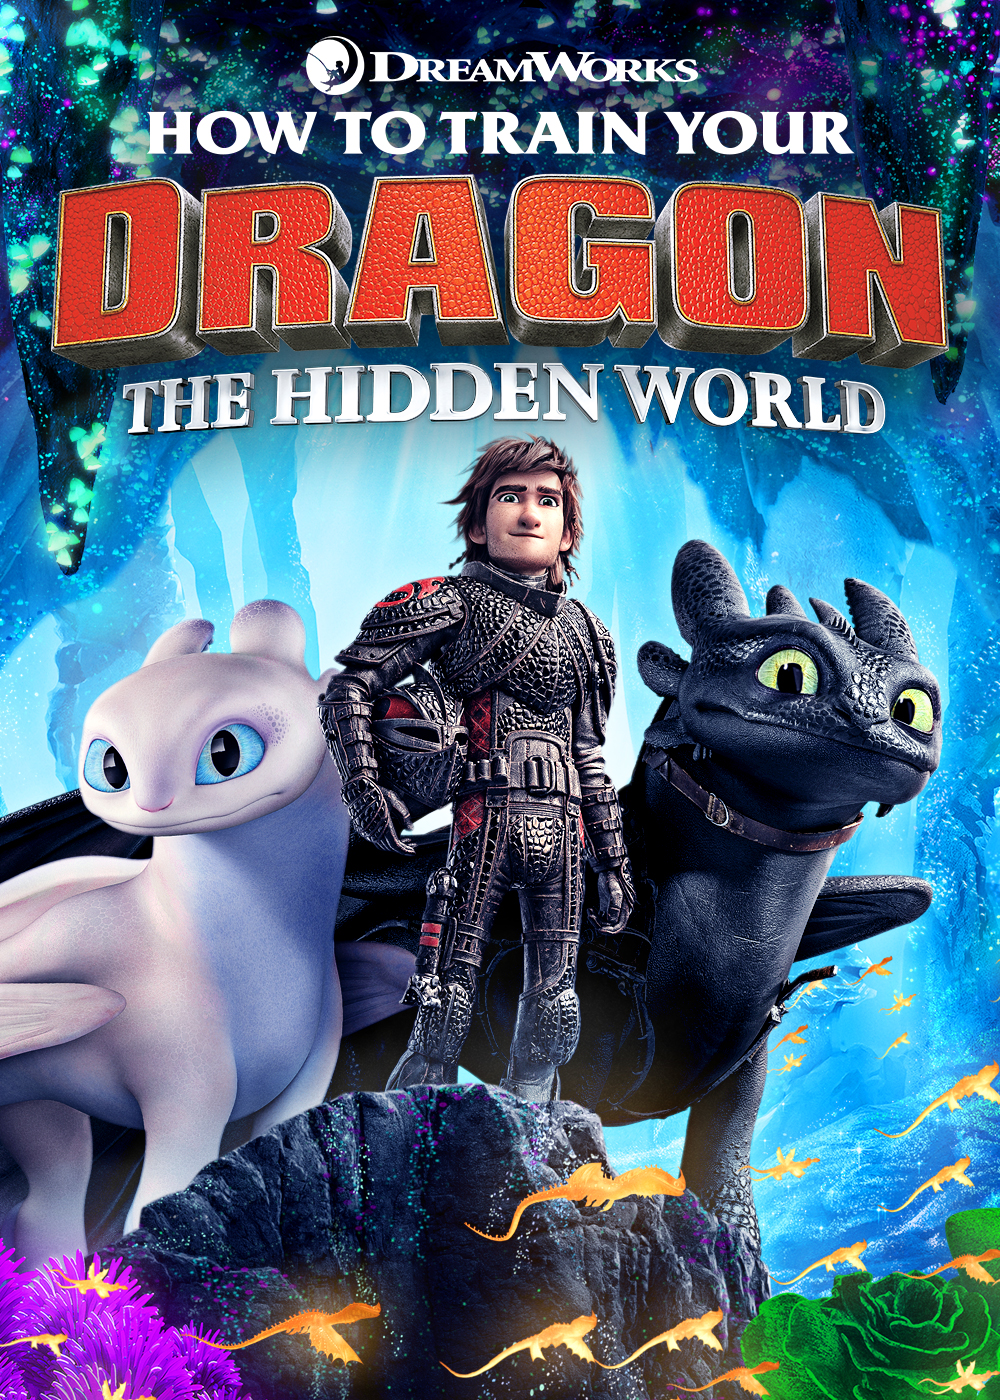 Stiahni si Filmy Kreslené Jak vycvicit draka 3 / How to Train Your Dragon: The Hidden World (2019)(CZ/EN) = CSFD 78%